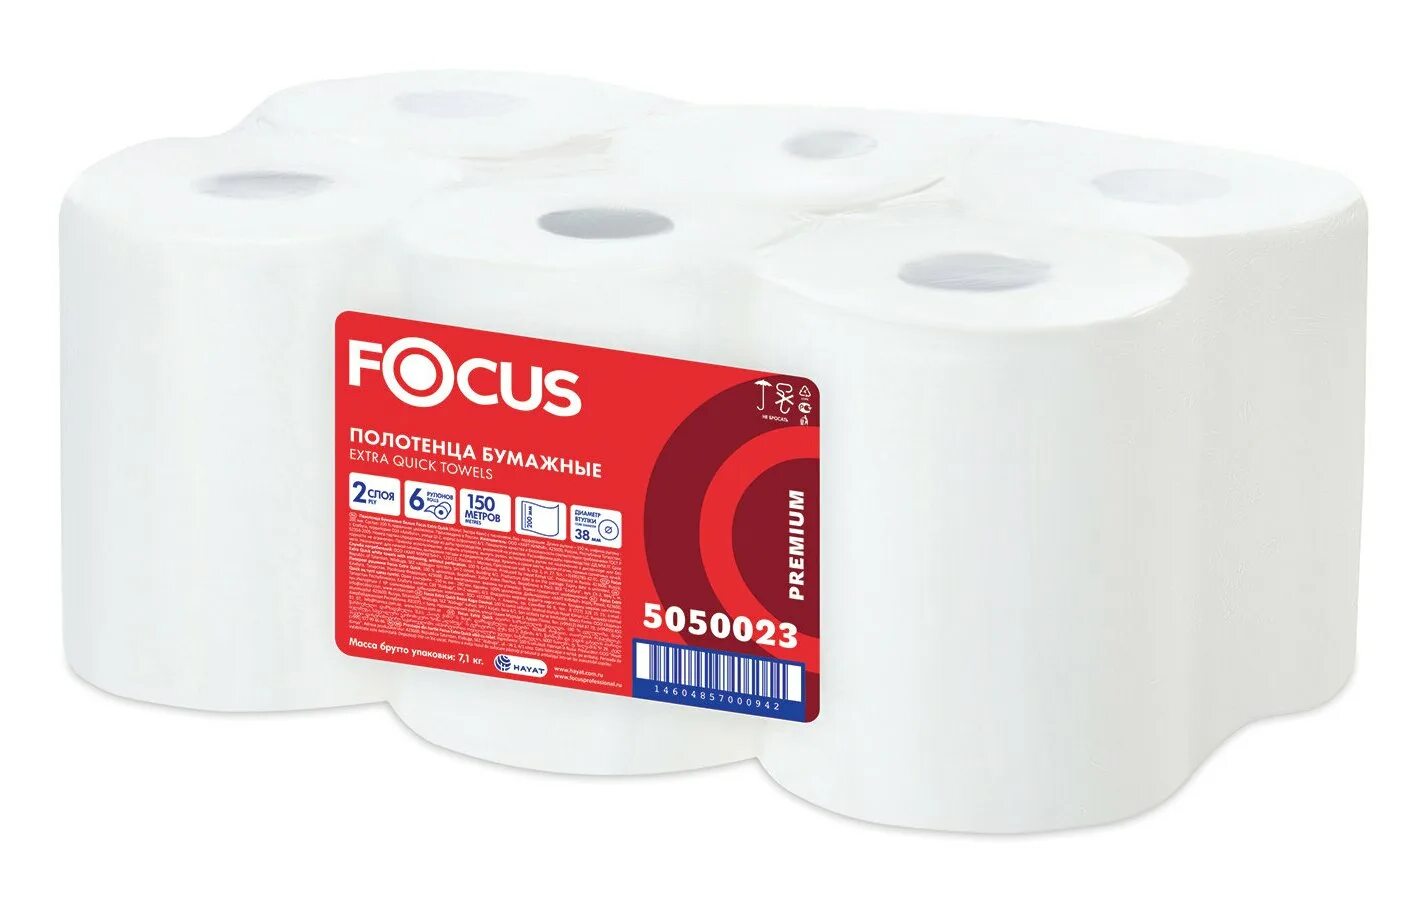 Бумажные полотенца 100 целлюлоза. Туалетная бумага Focus Jumbo Mini. Полотенце бумажное 2сл 150м Focus Extra quick. Бумажные полотенца в рулоне 2сл 150м "Focus" /втулка 38мм/ (6шт) 5050023. 5036904 Бумага туалетная Focus Mini Jumbo 2сл.